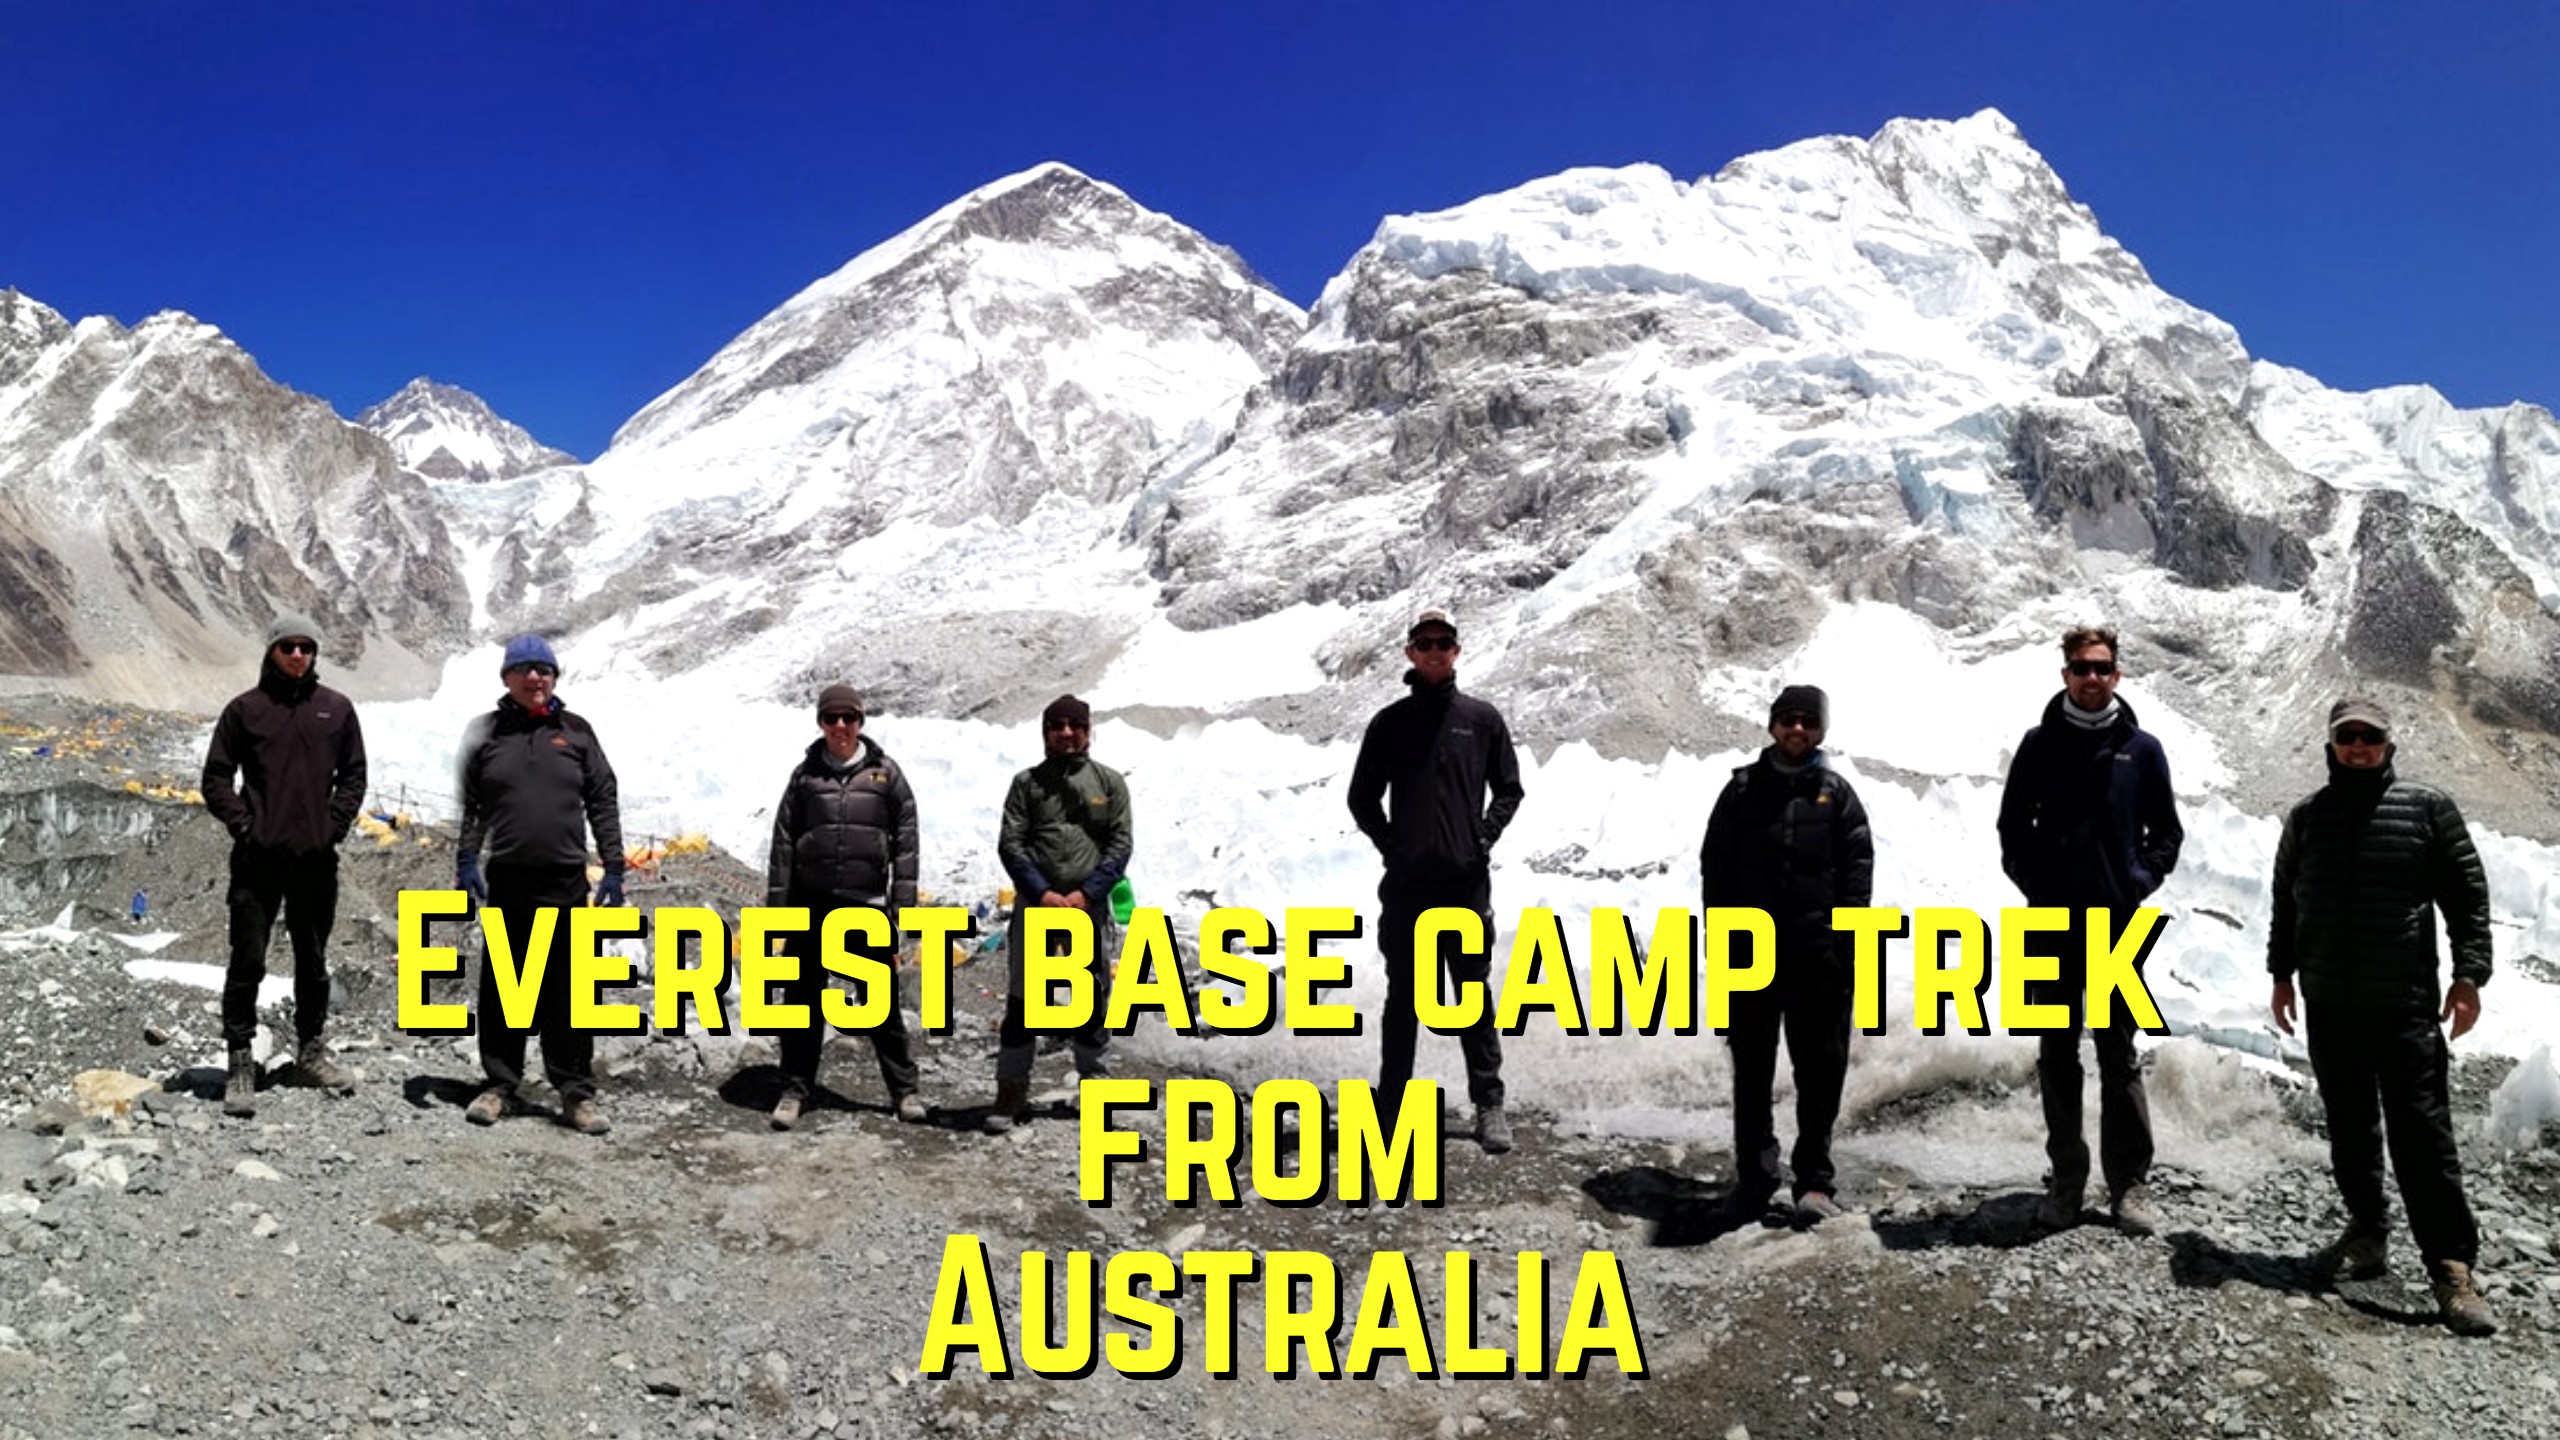 Mount Everest base camp trek blog with stories & tips to visit EBC